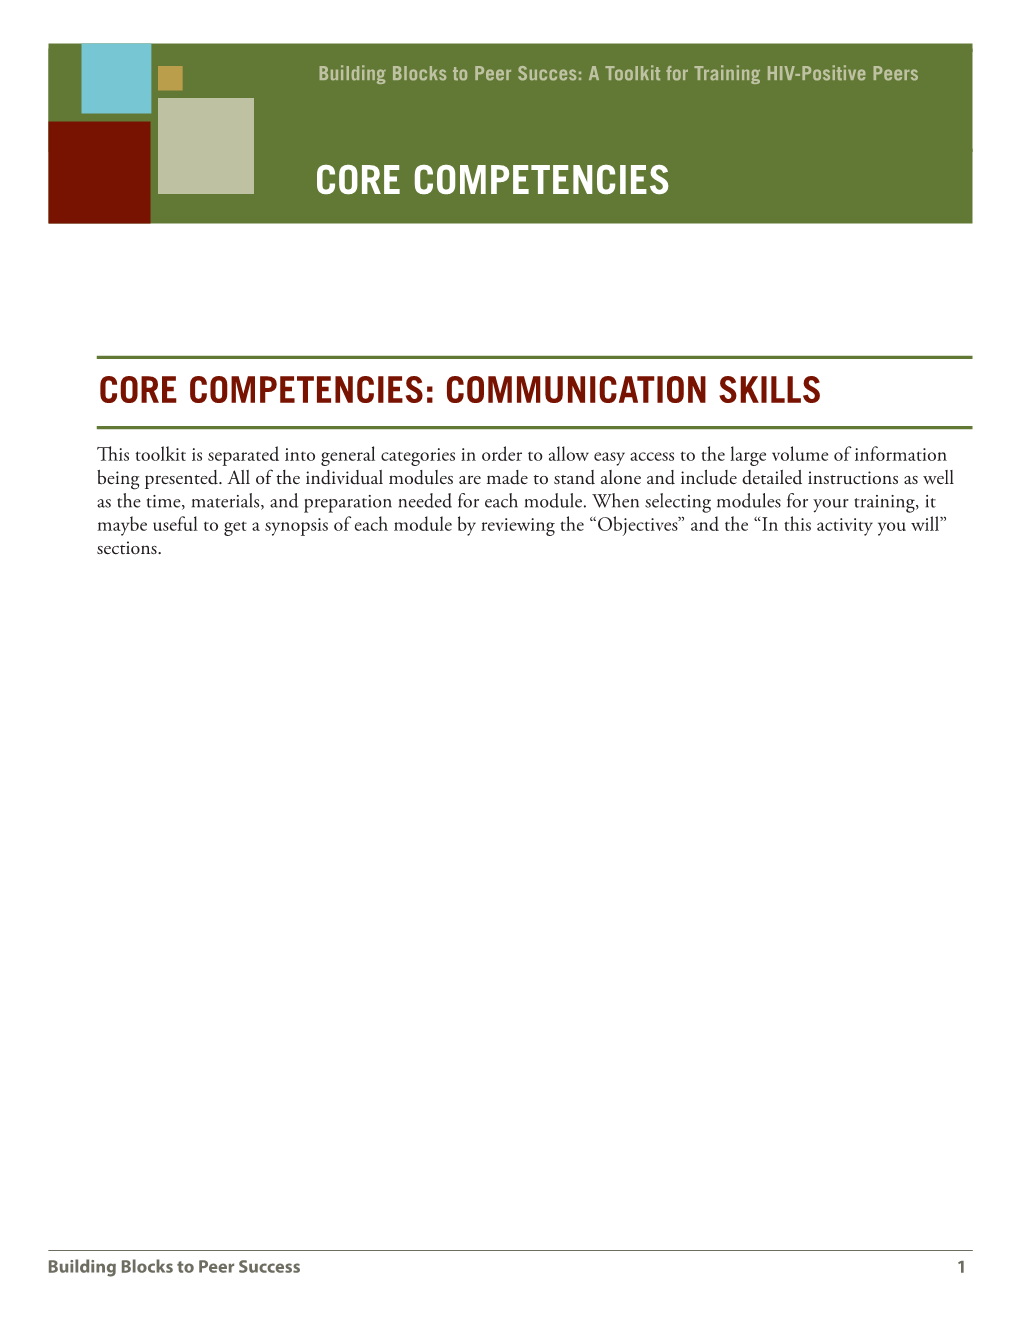 Toolkit Modules: Core Competencies: Communication Skills